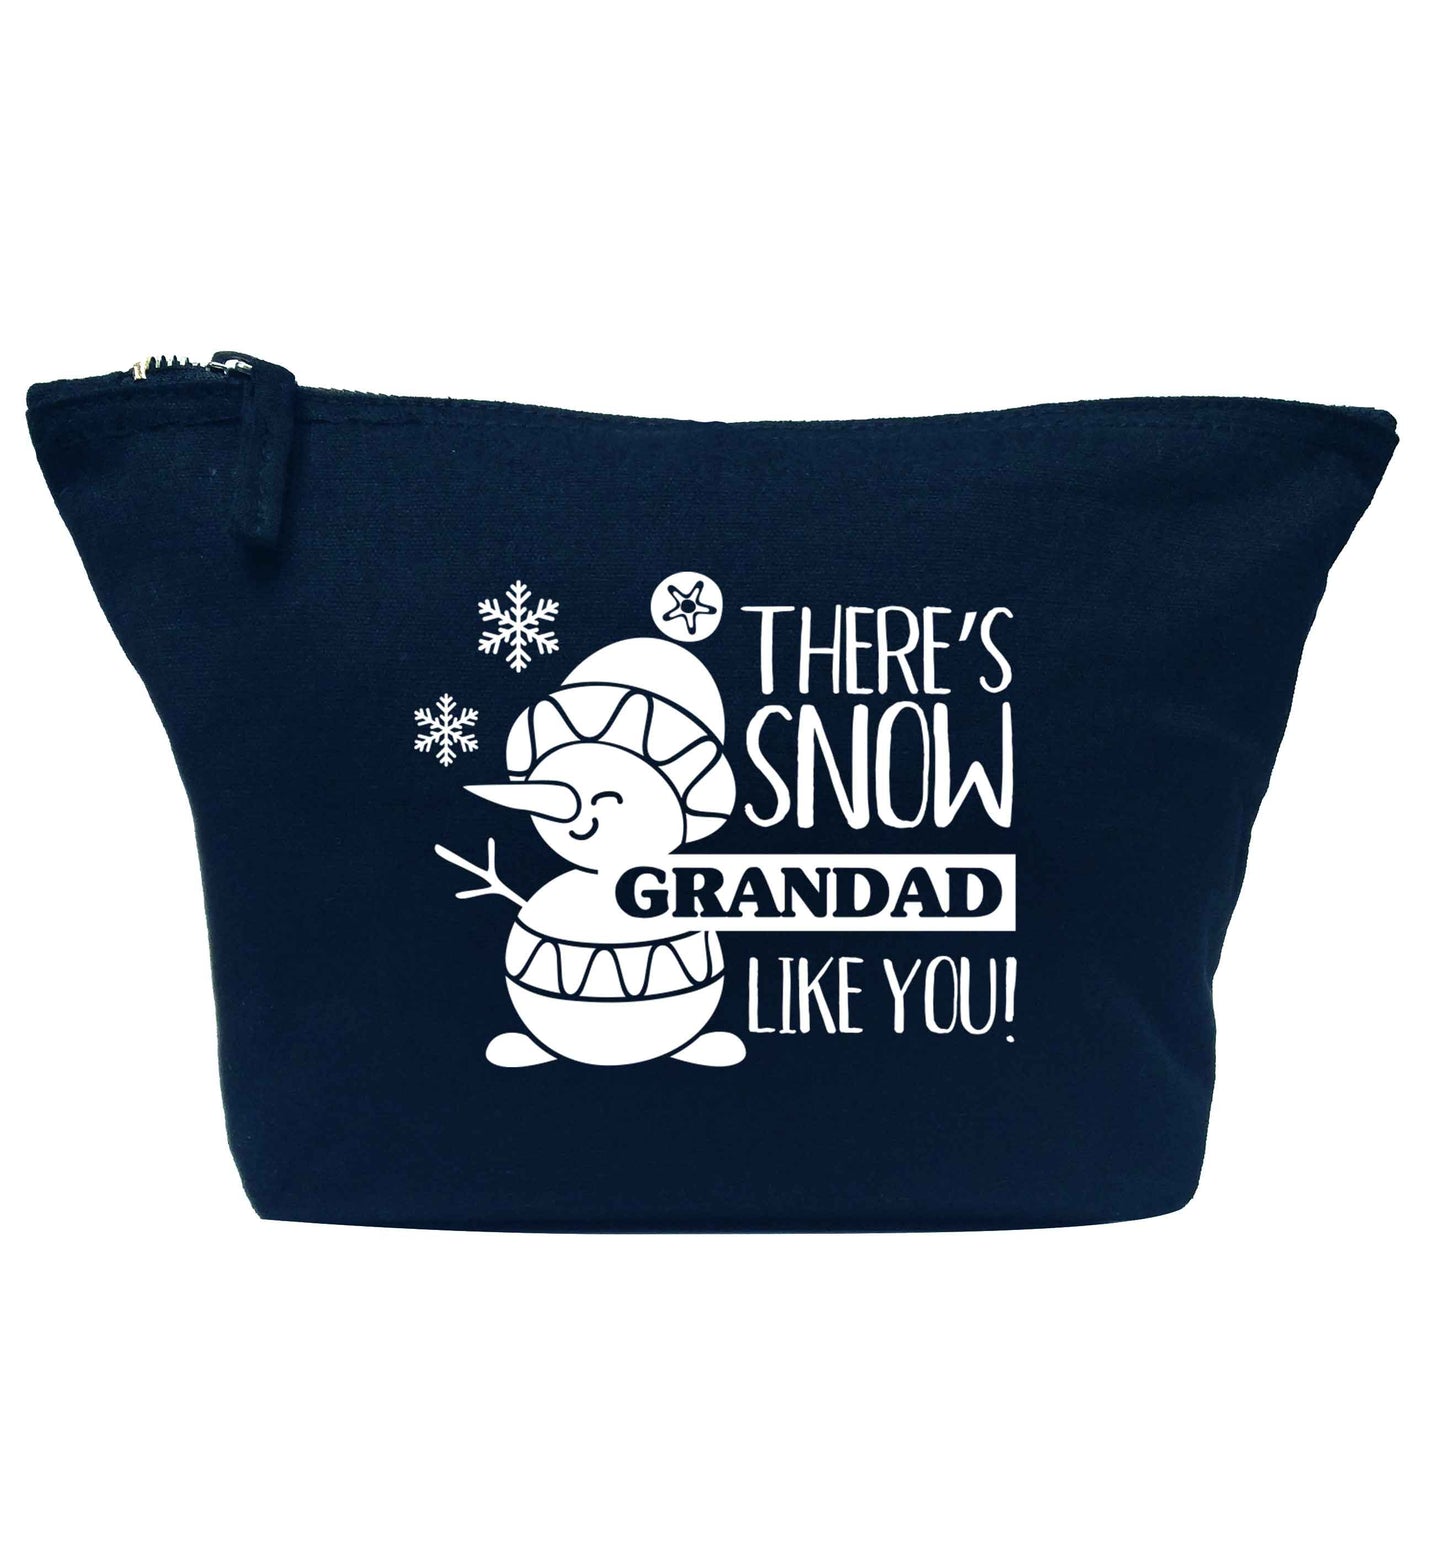 There's snow grandad like you navy makeup bag